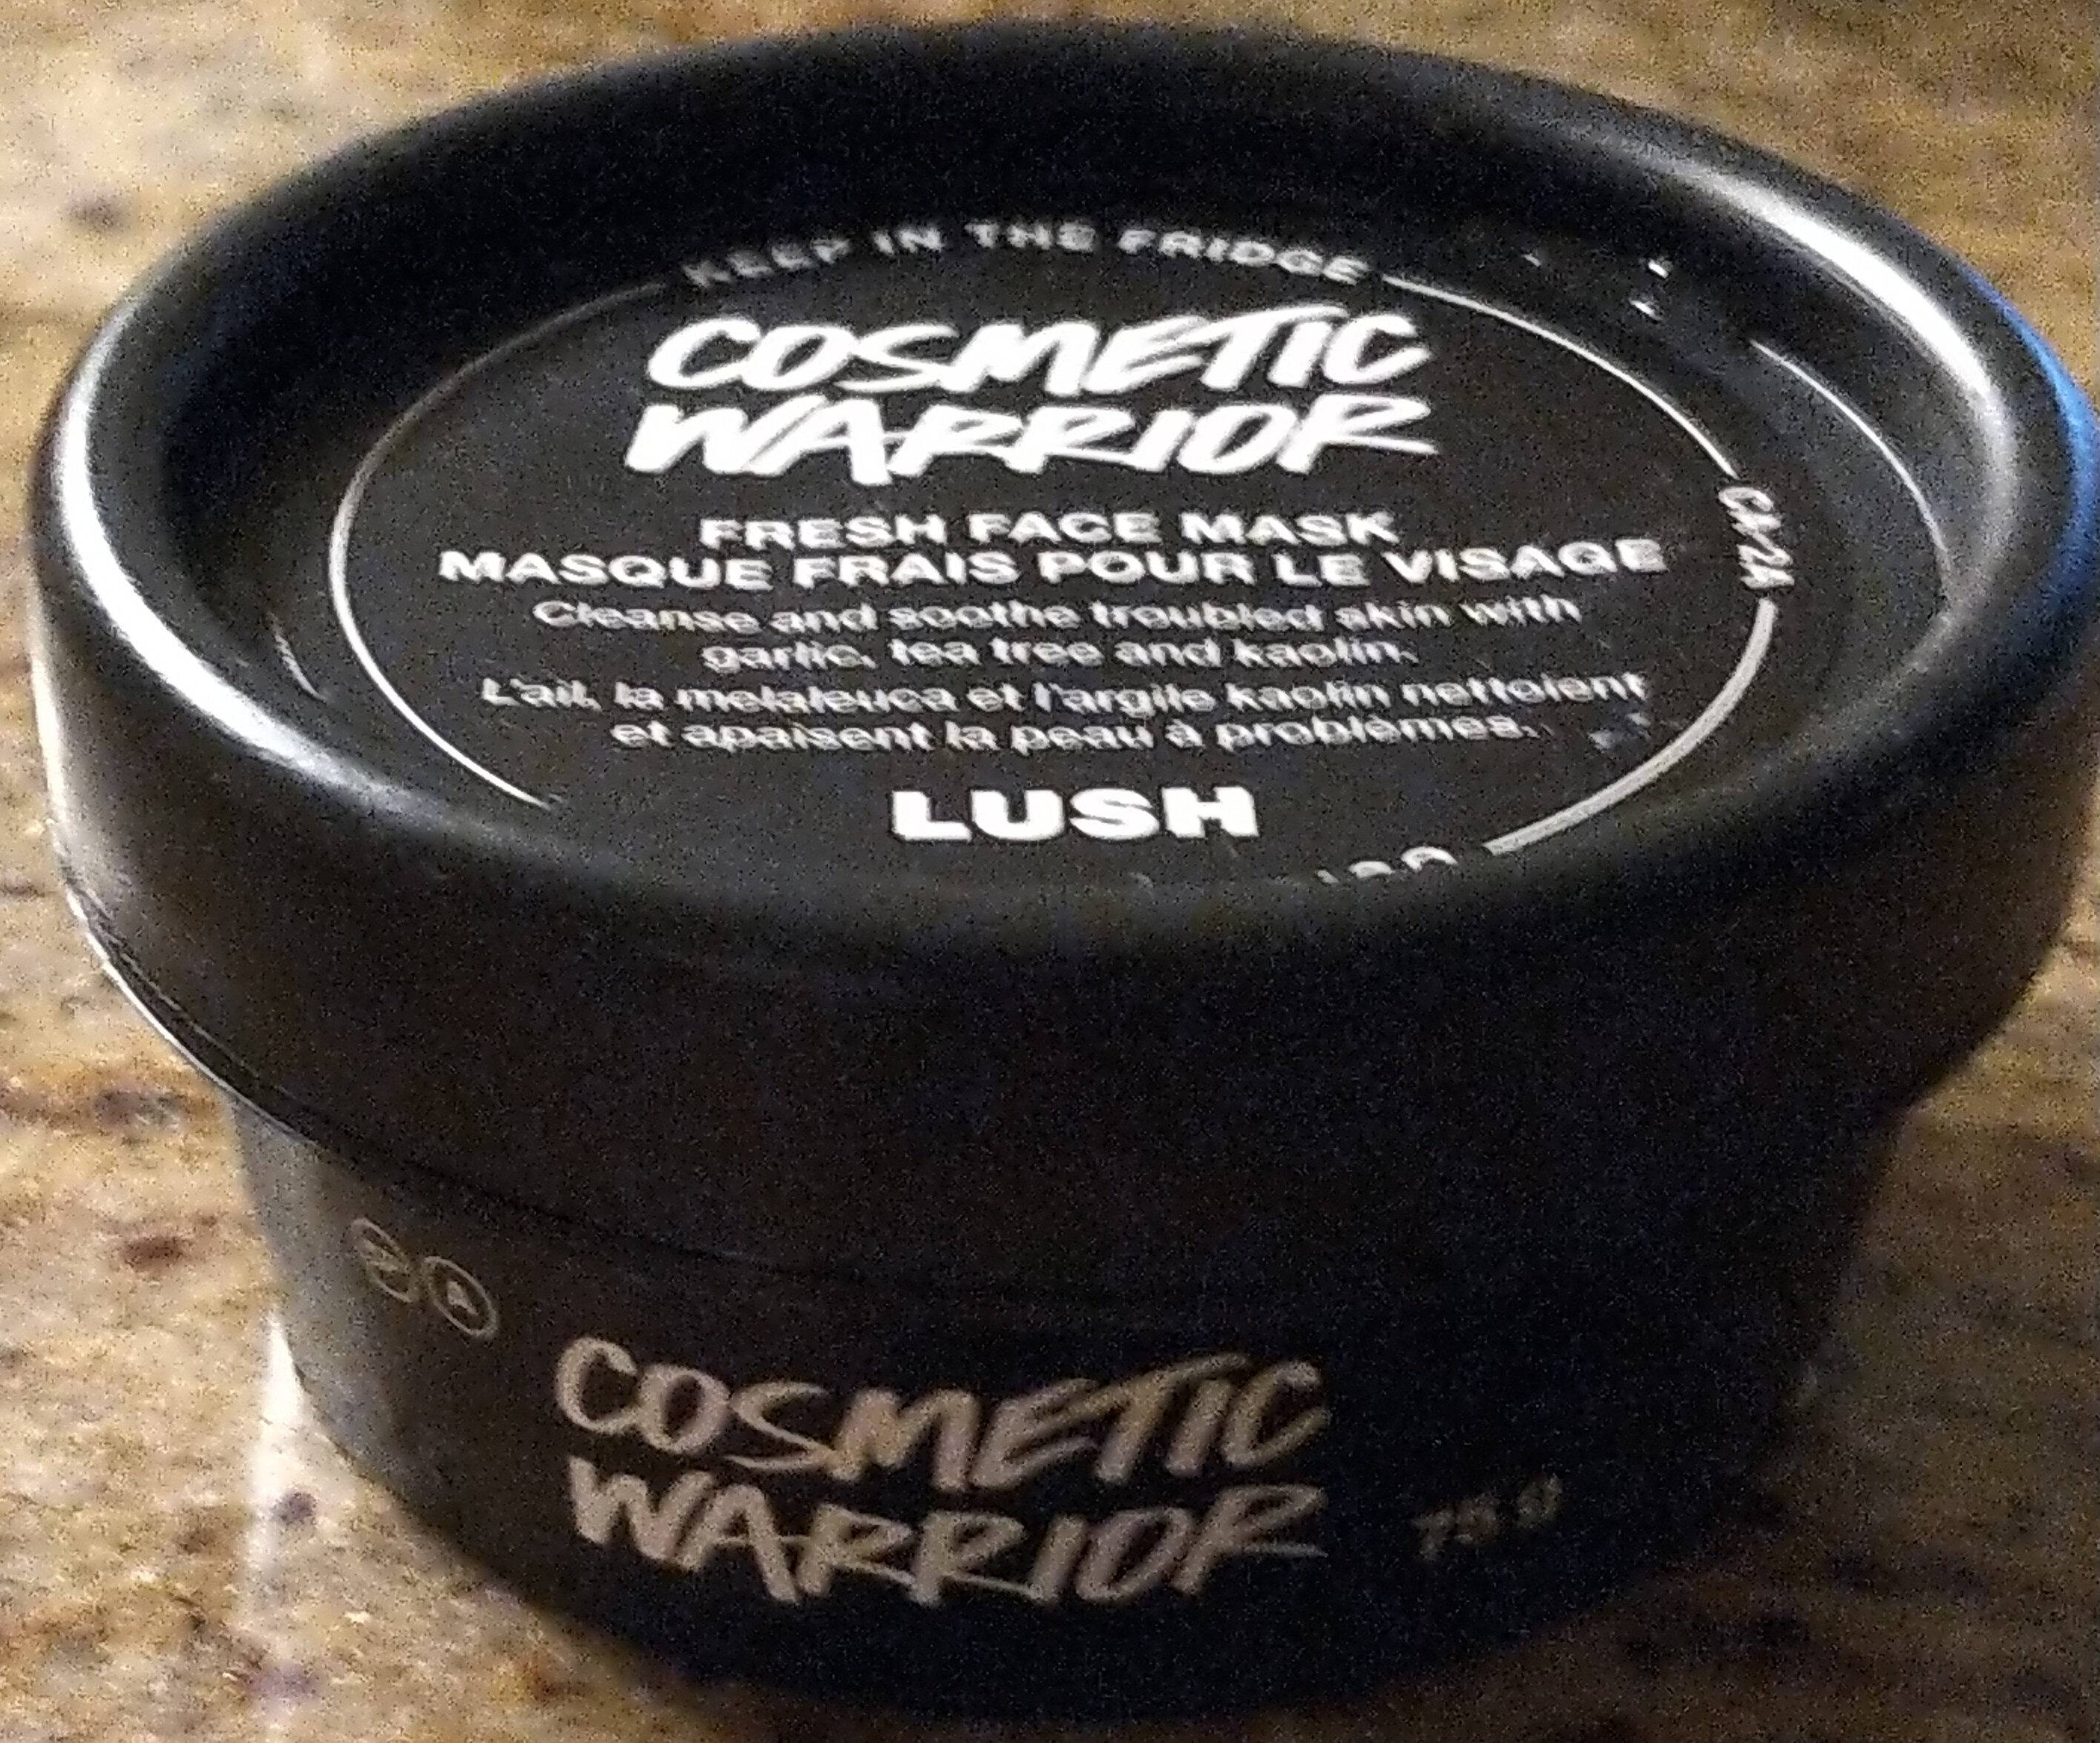 Cosmetic Warrior Fresh Face Mask - Produit - fr